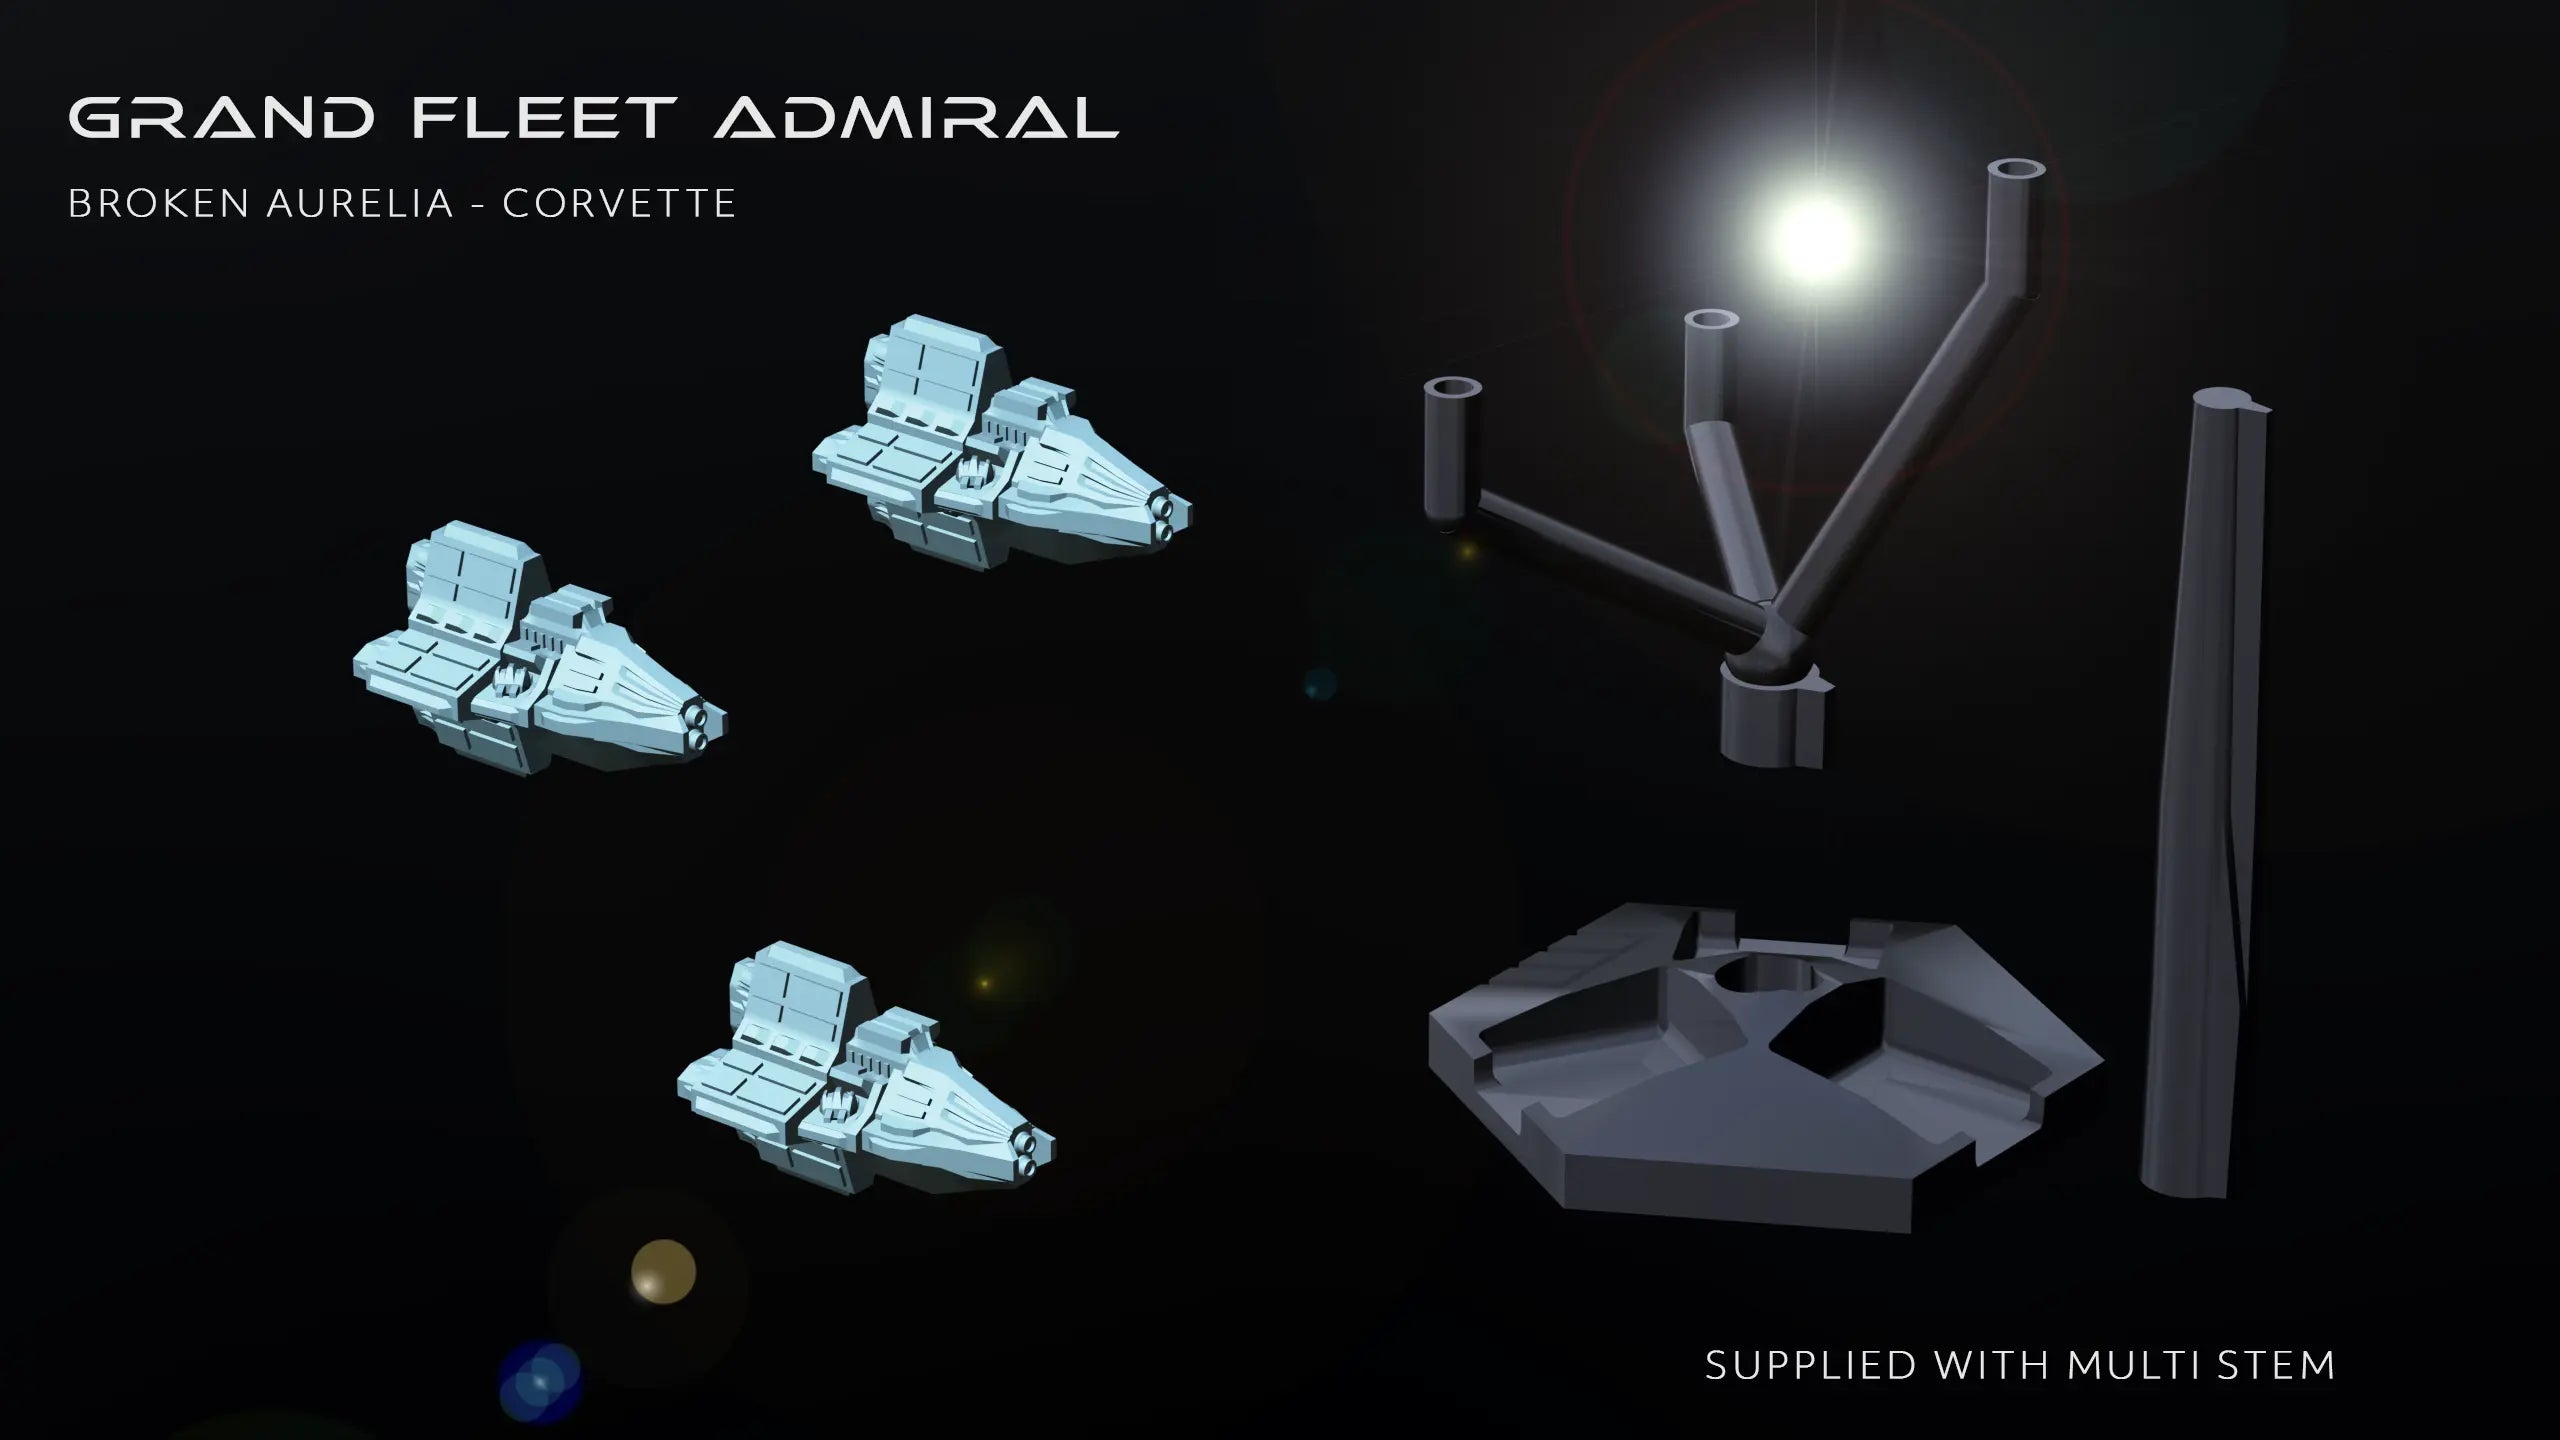 Imperial Hemina - Corvette (3) Grand Fleet Admiral